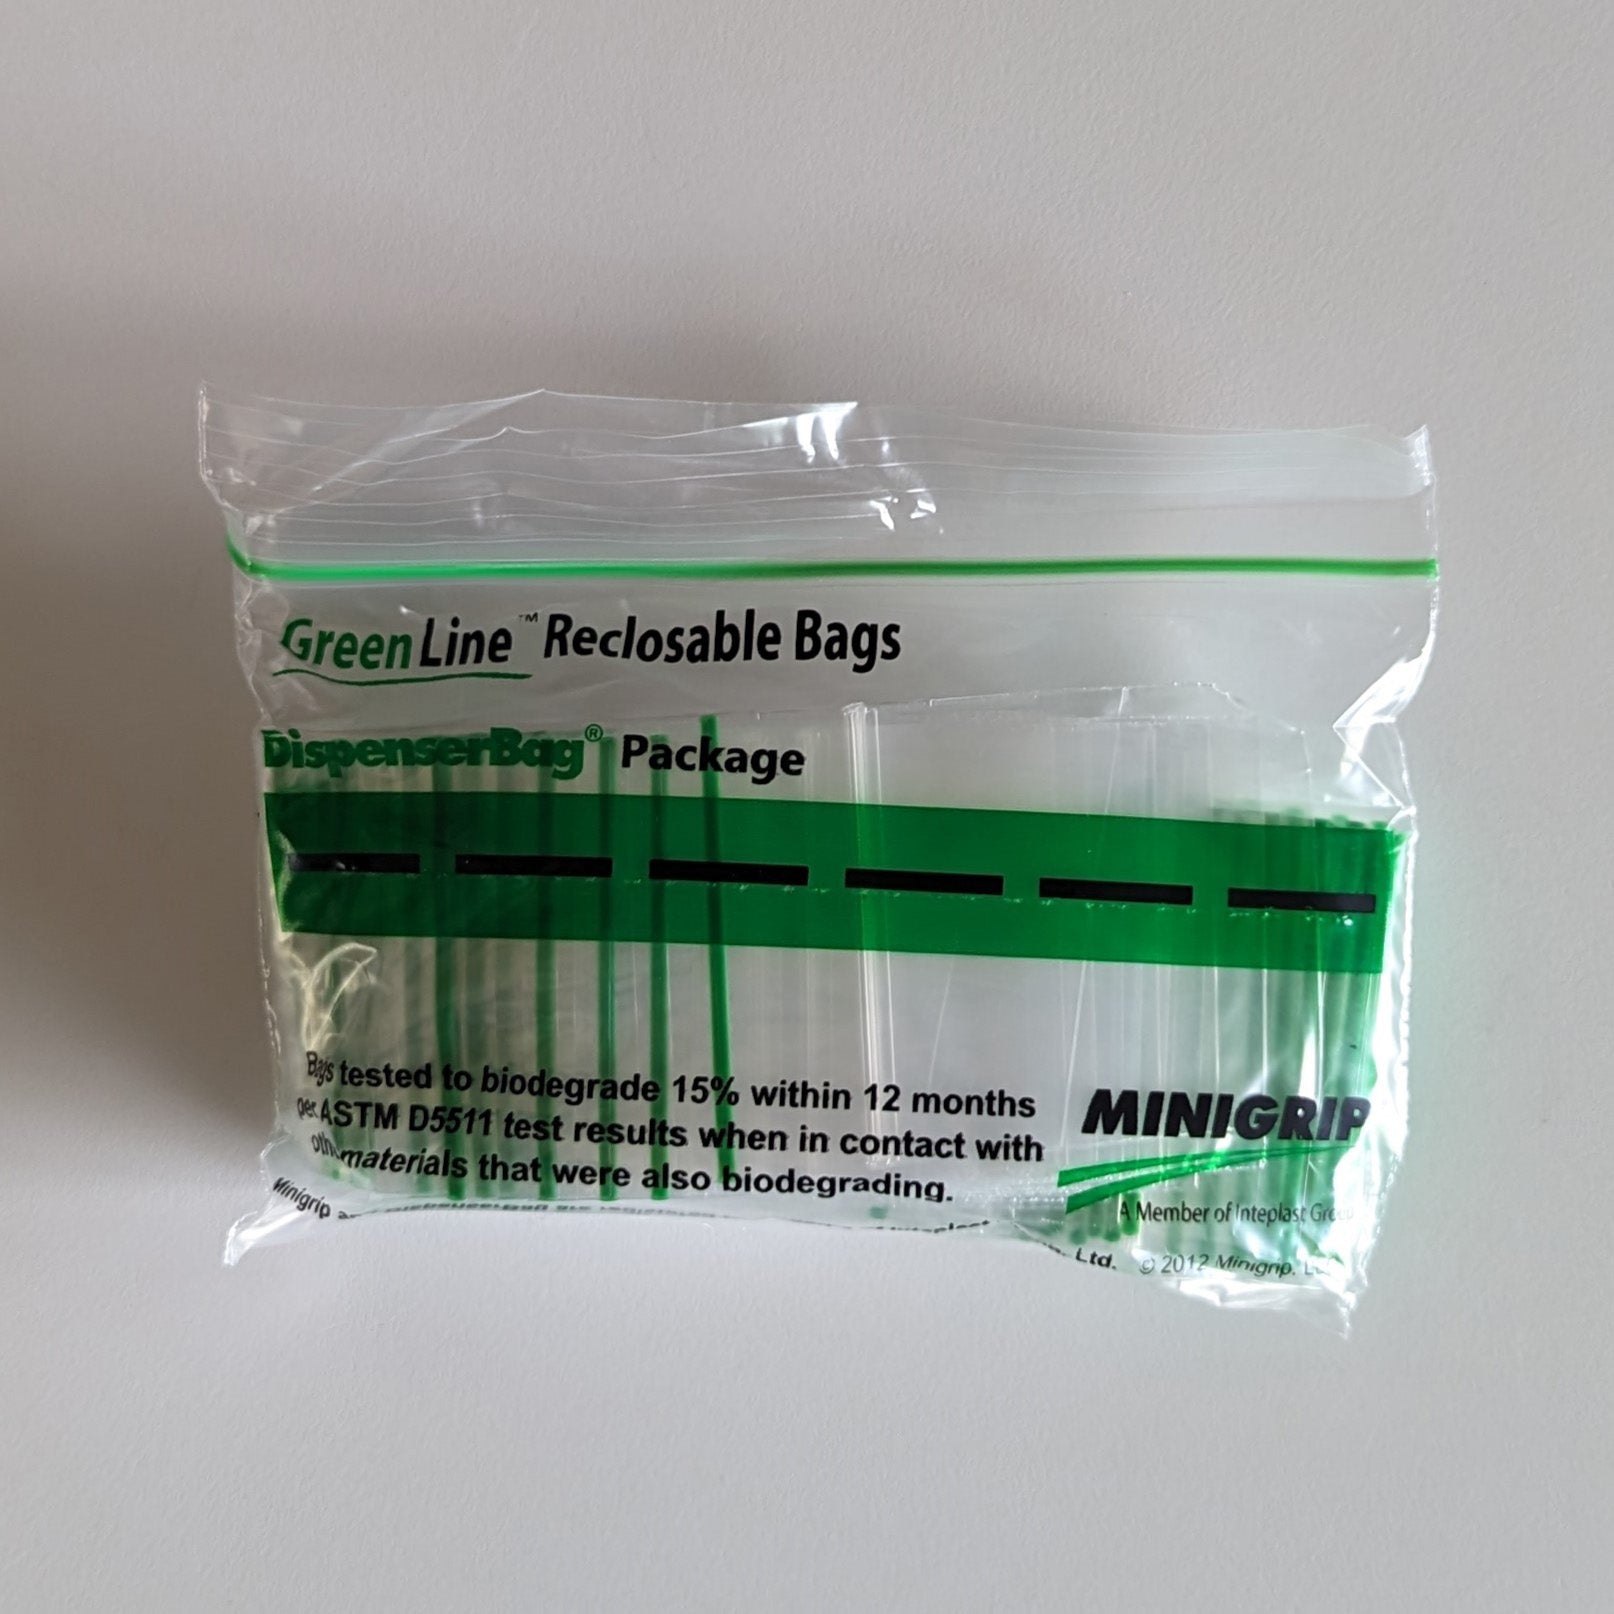 Biodegradable bag - Wikipedia